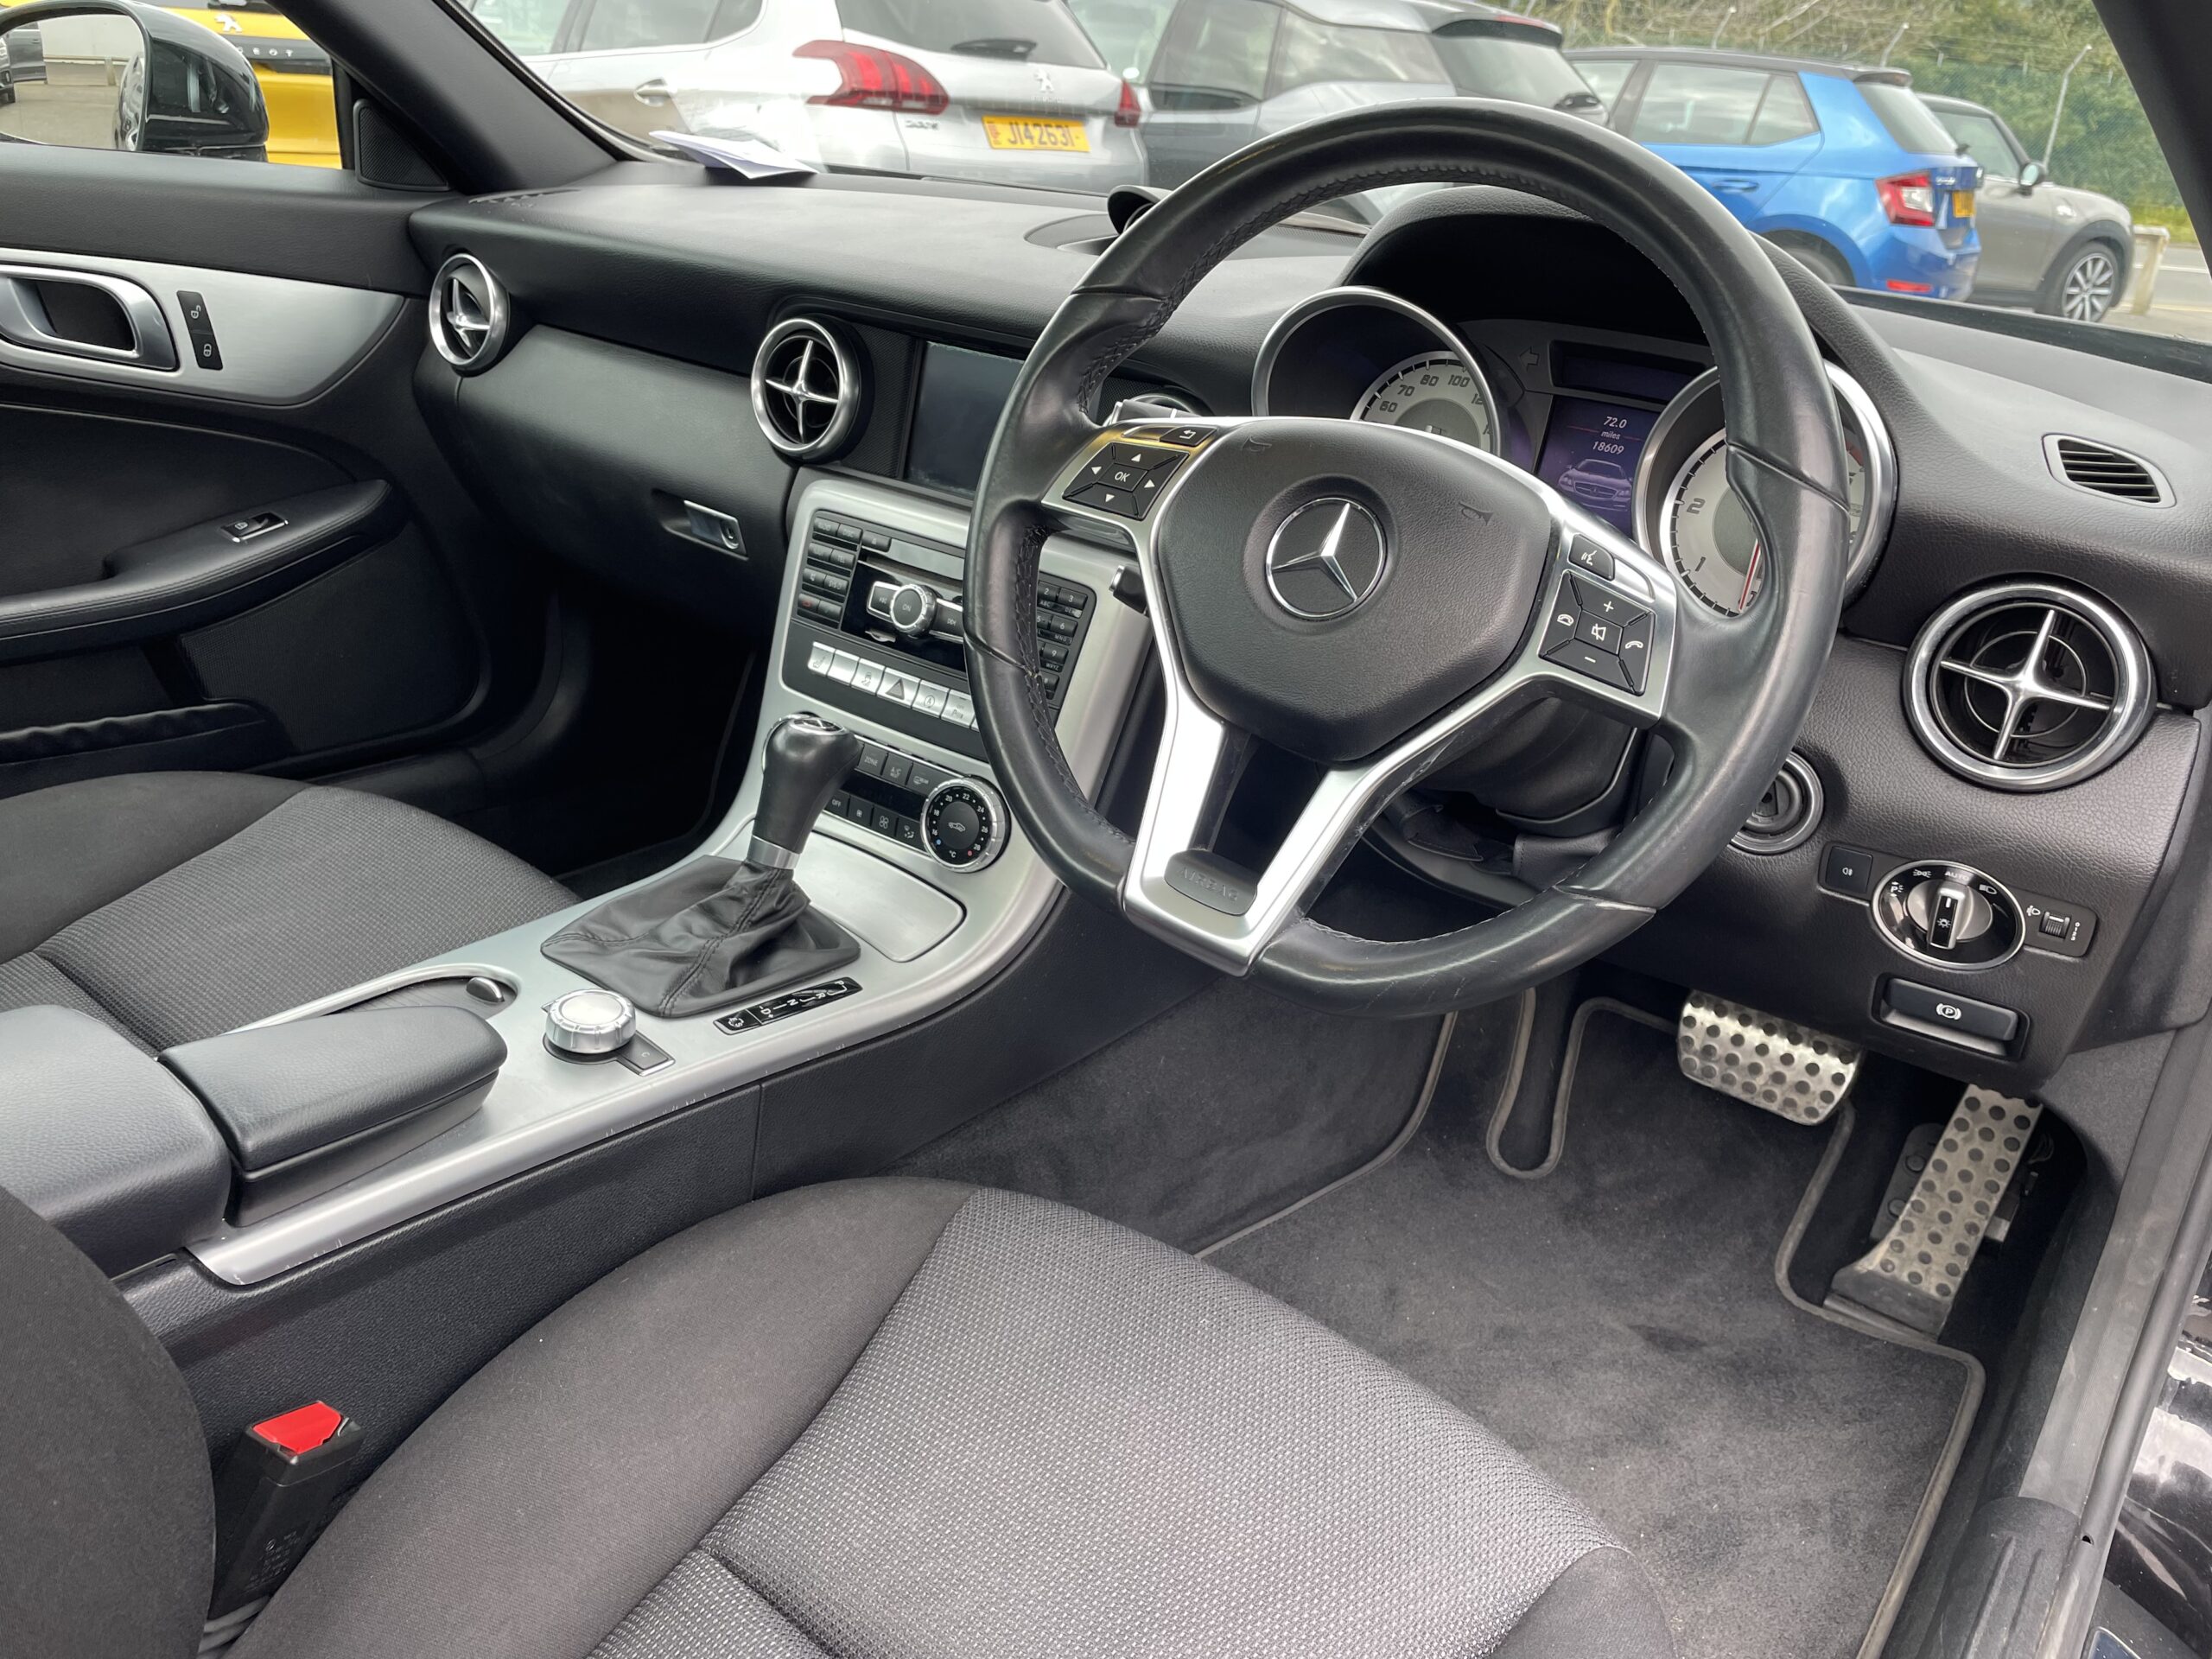 Reduced2015 Merc Benz Slk 250 Cdi Convertible Automatic Heated Seatsbluetoothparking Sensors Now Only 12995 3